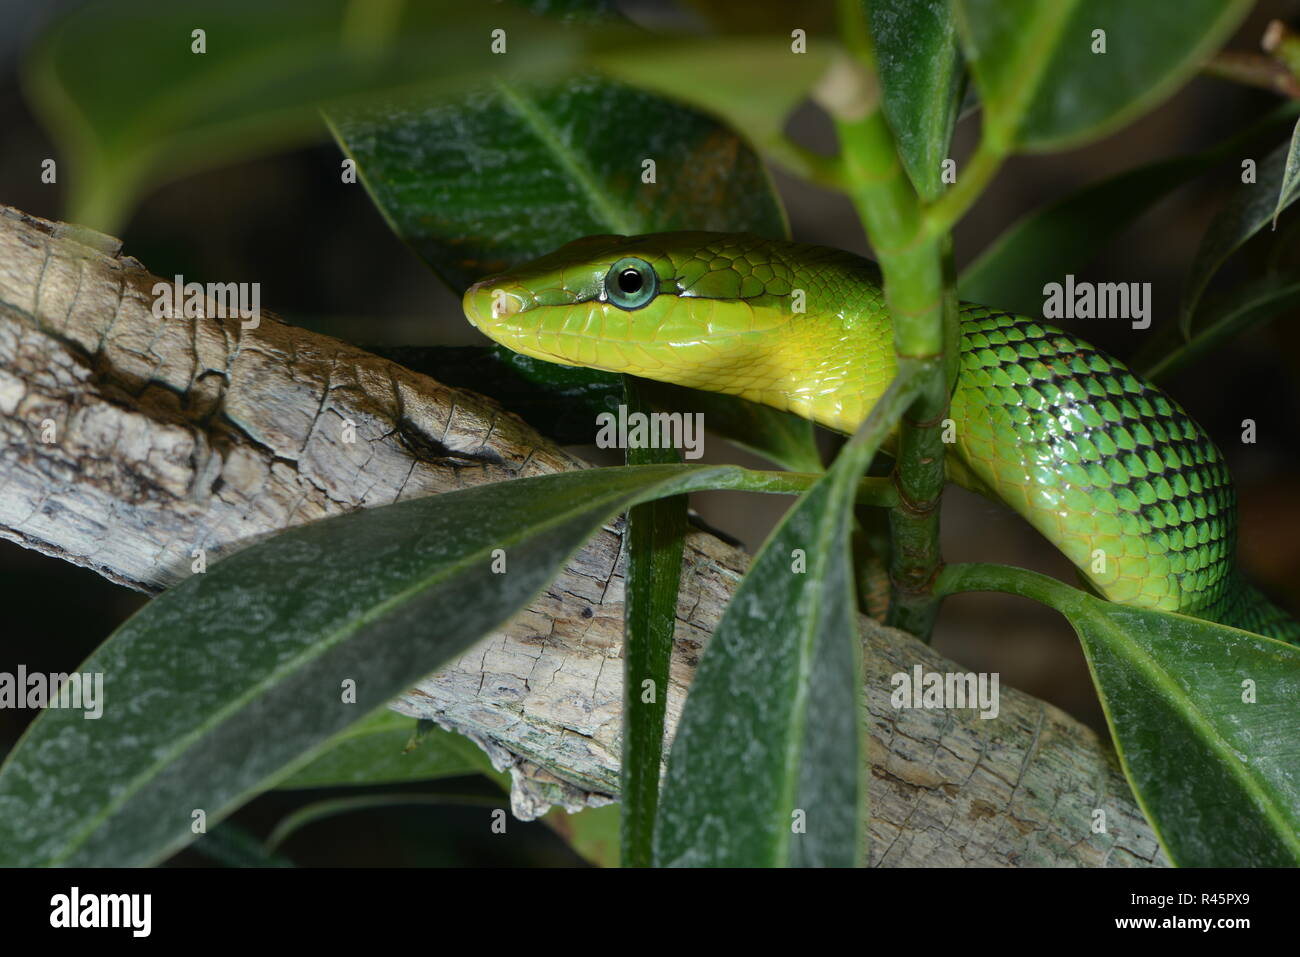 green spitzkopf snake Stock Photo